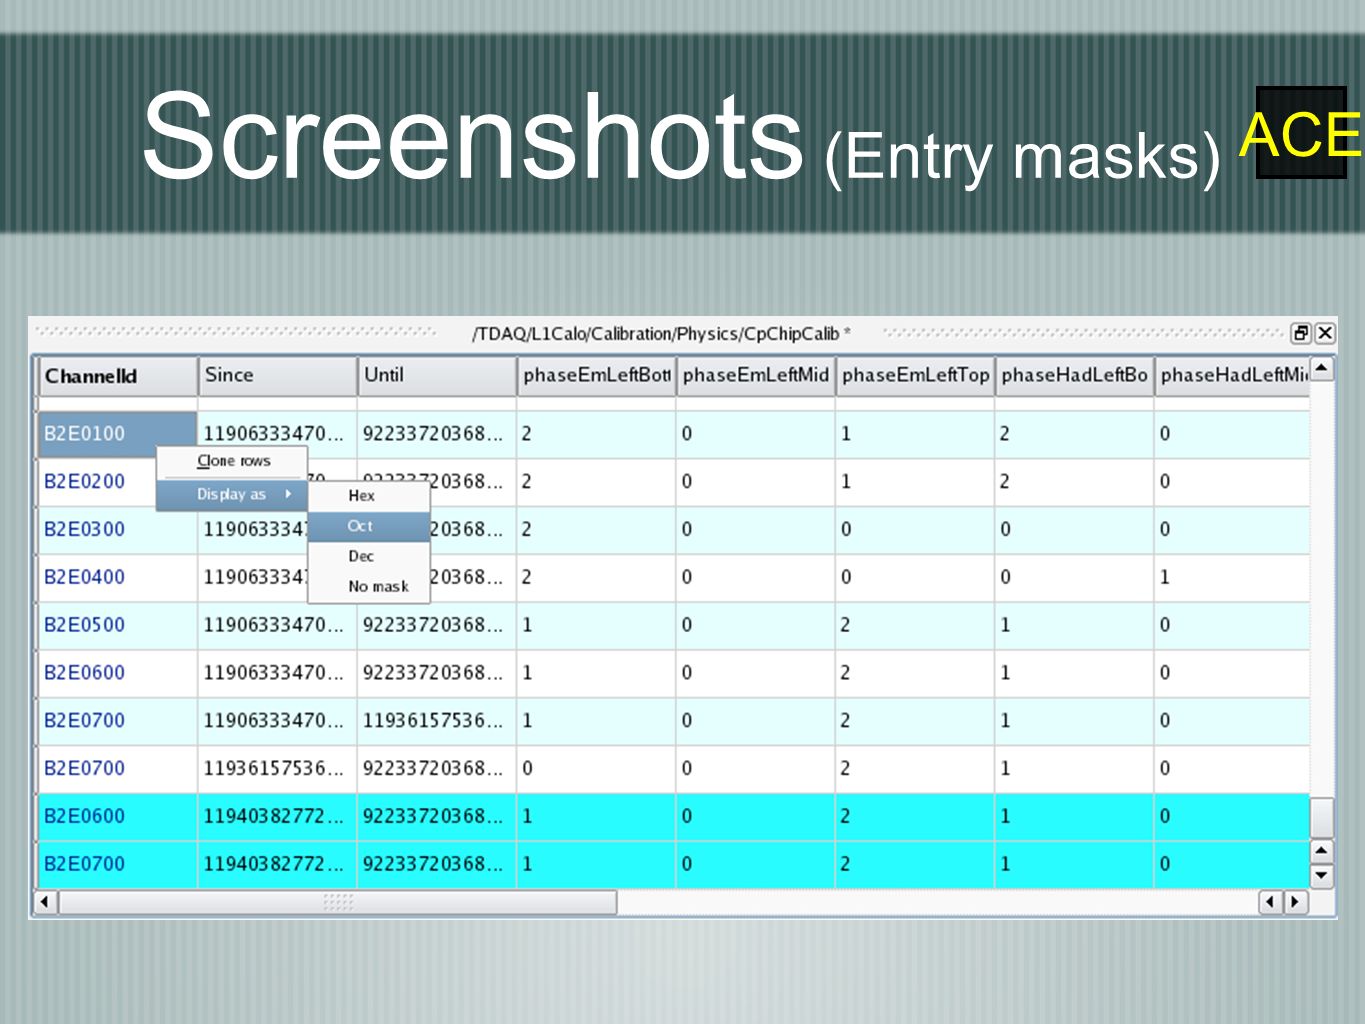 ACE Screenshots (Entry masks)